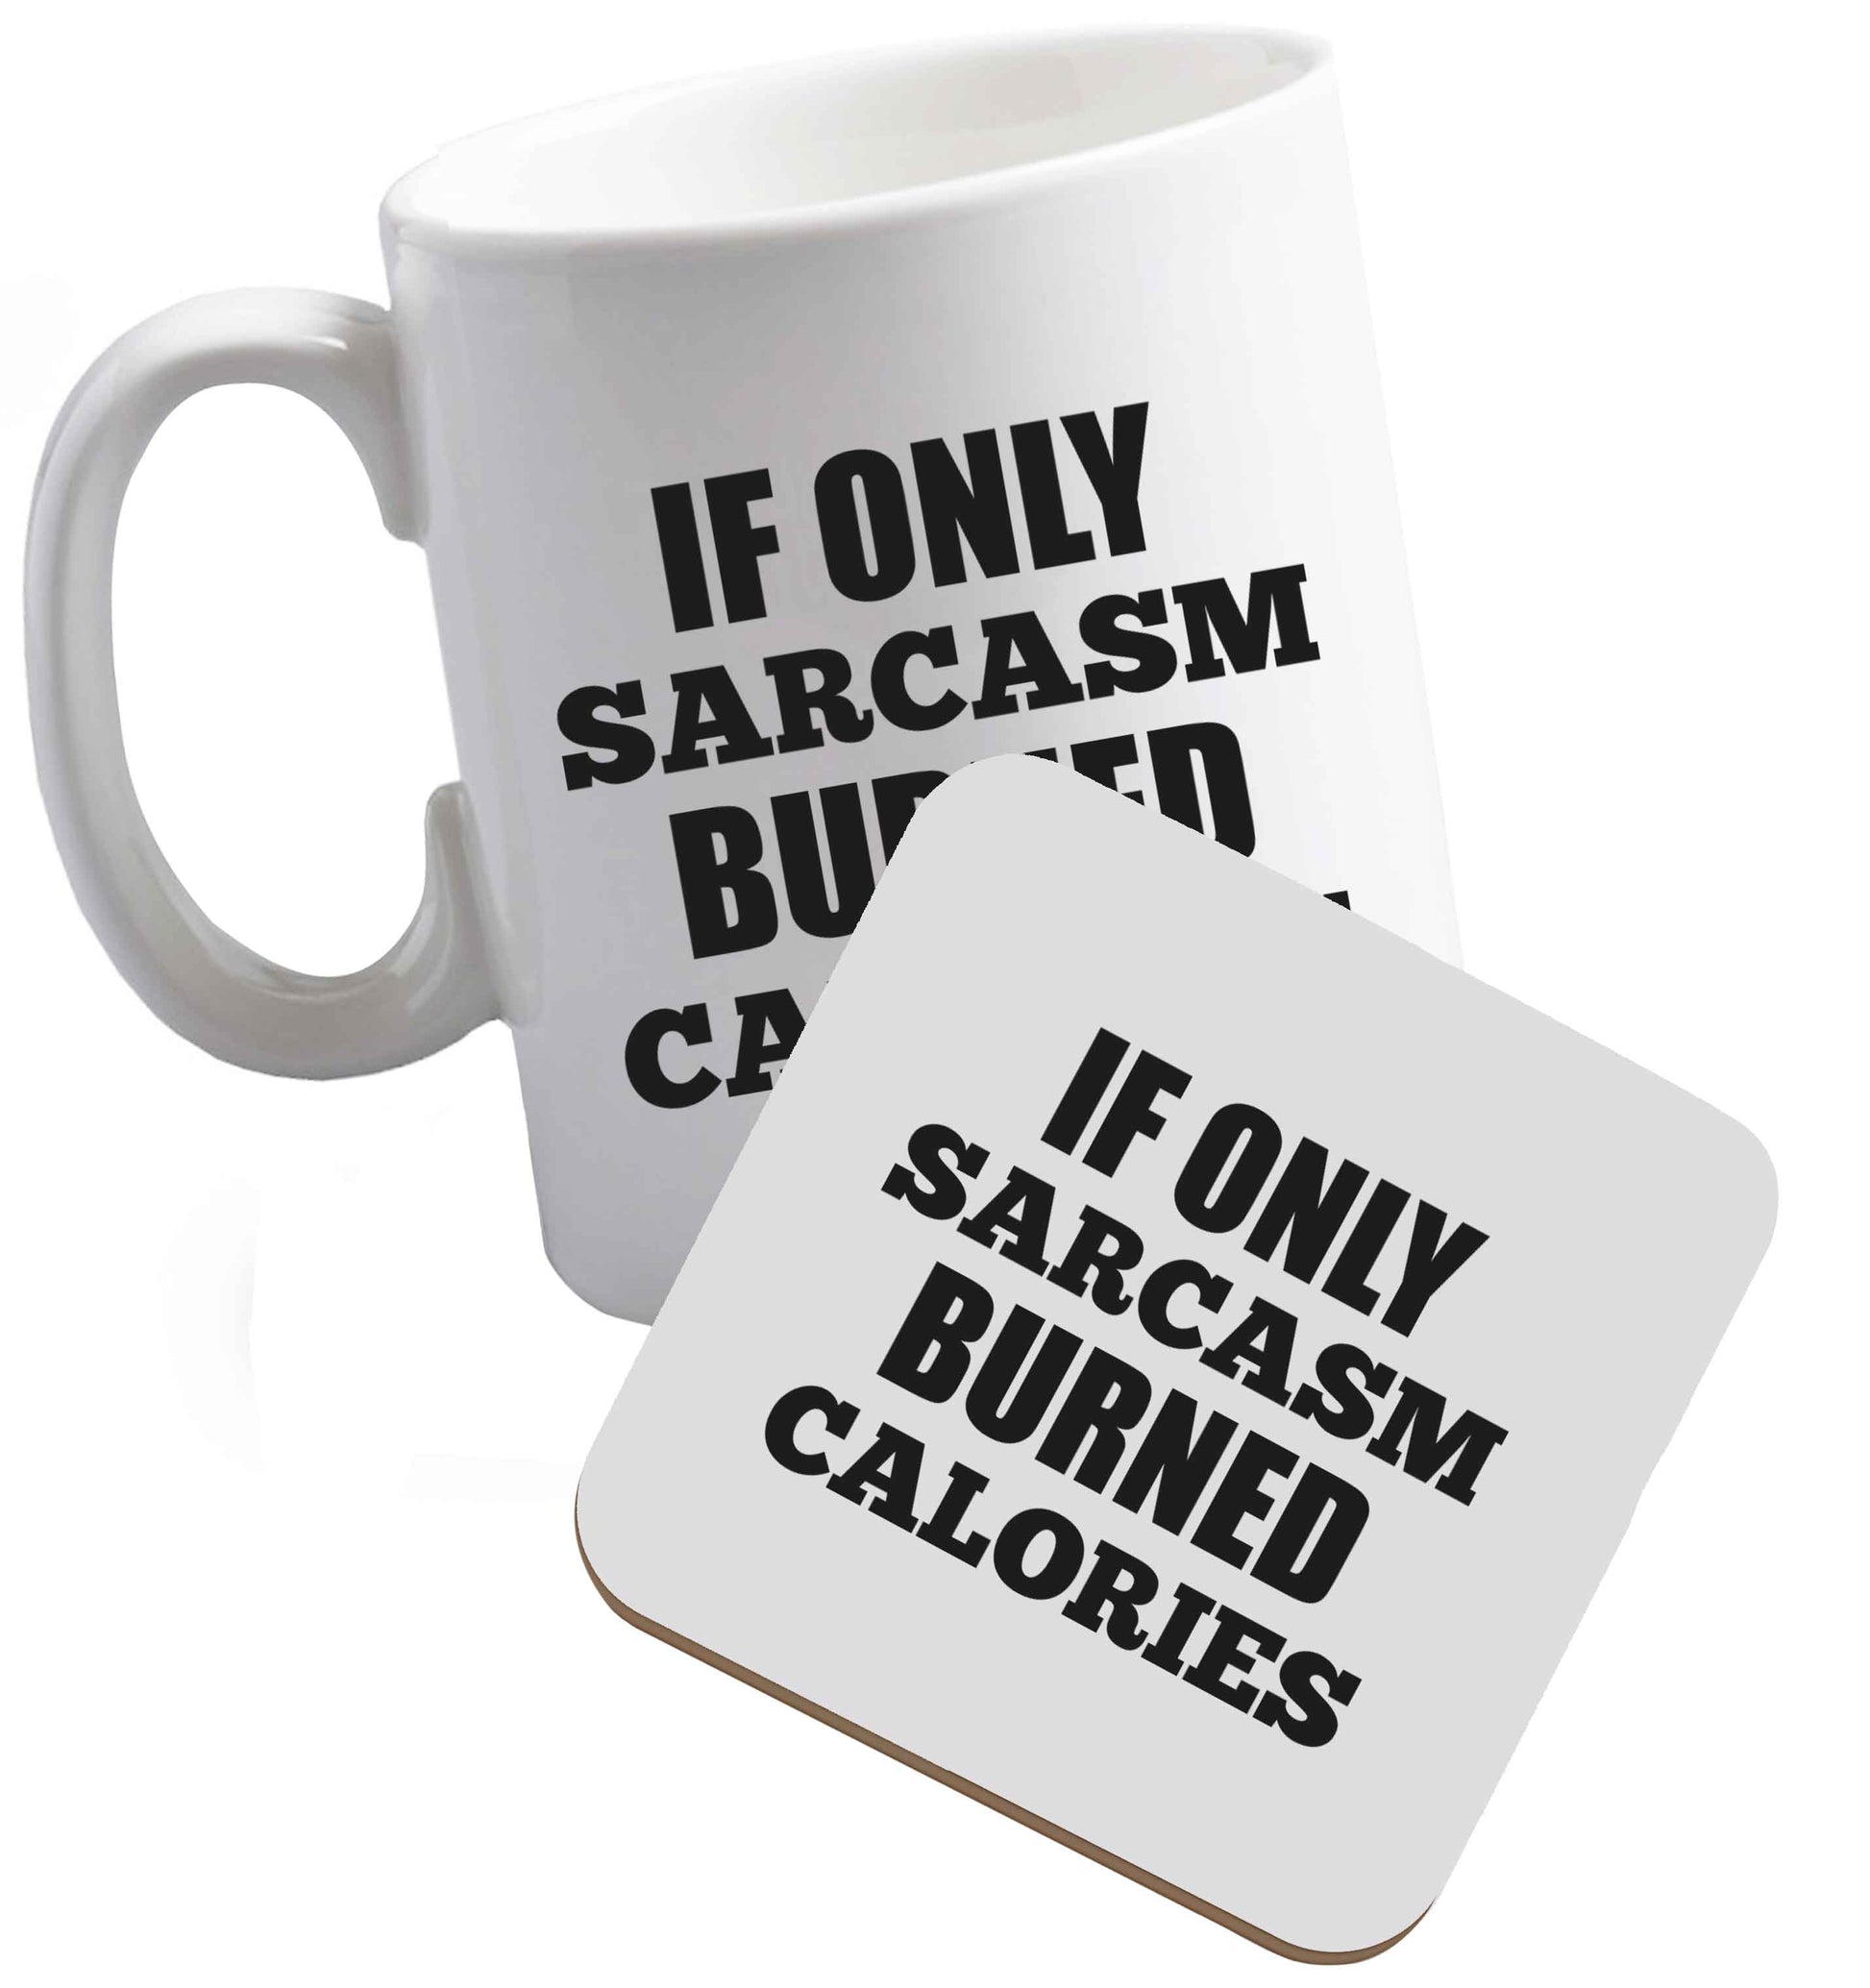 10 oz If only sarcasm burned calories ceramic mug and coaster set right handed